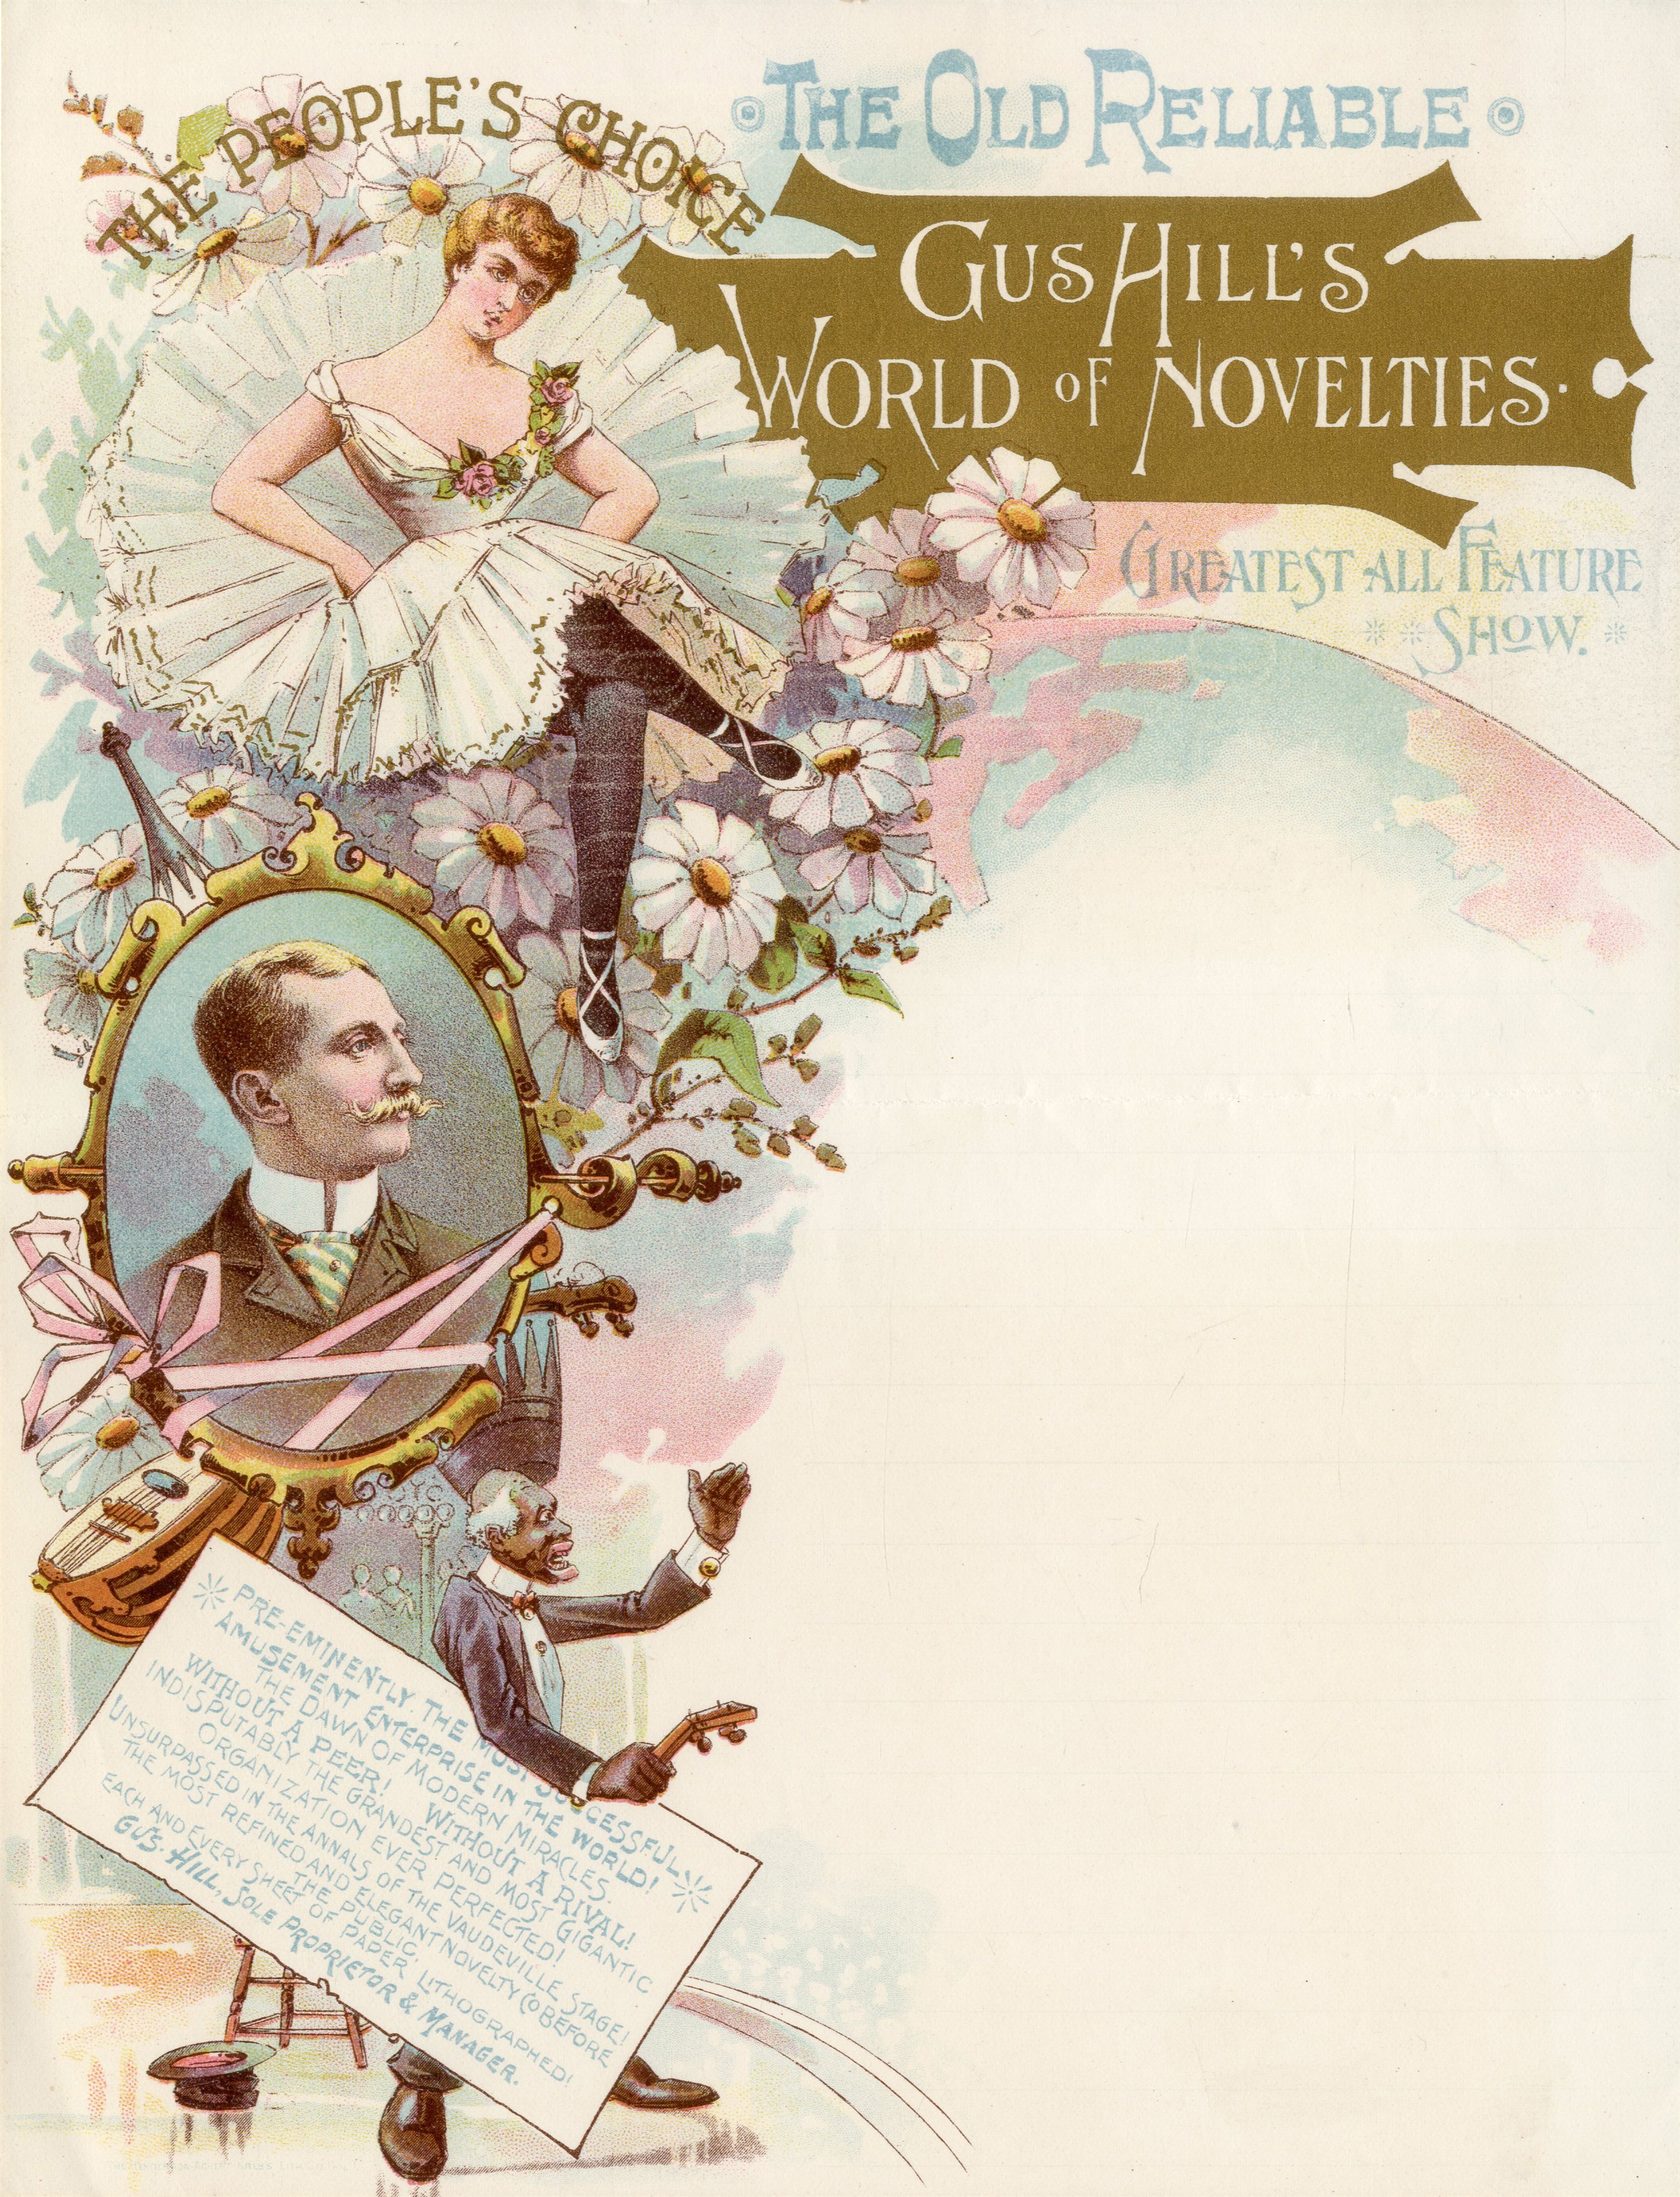 The New Yorker Collection - 1890s Vaudeville Blank Letterhead (4)